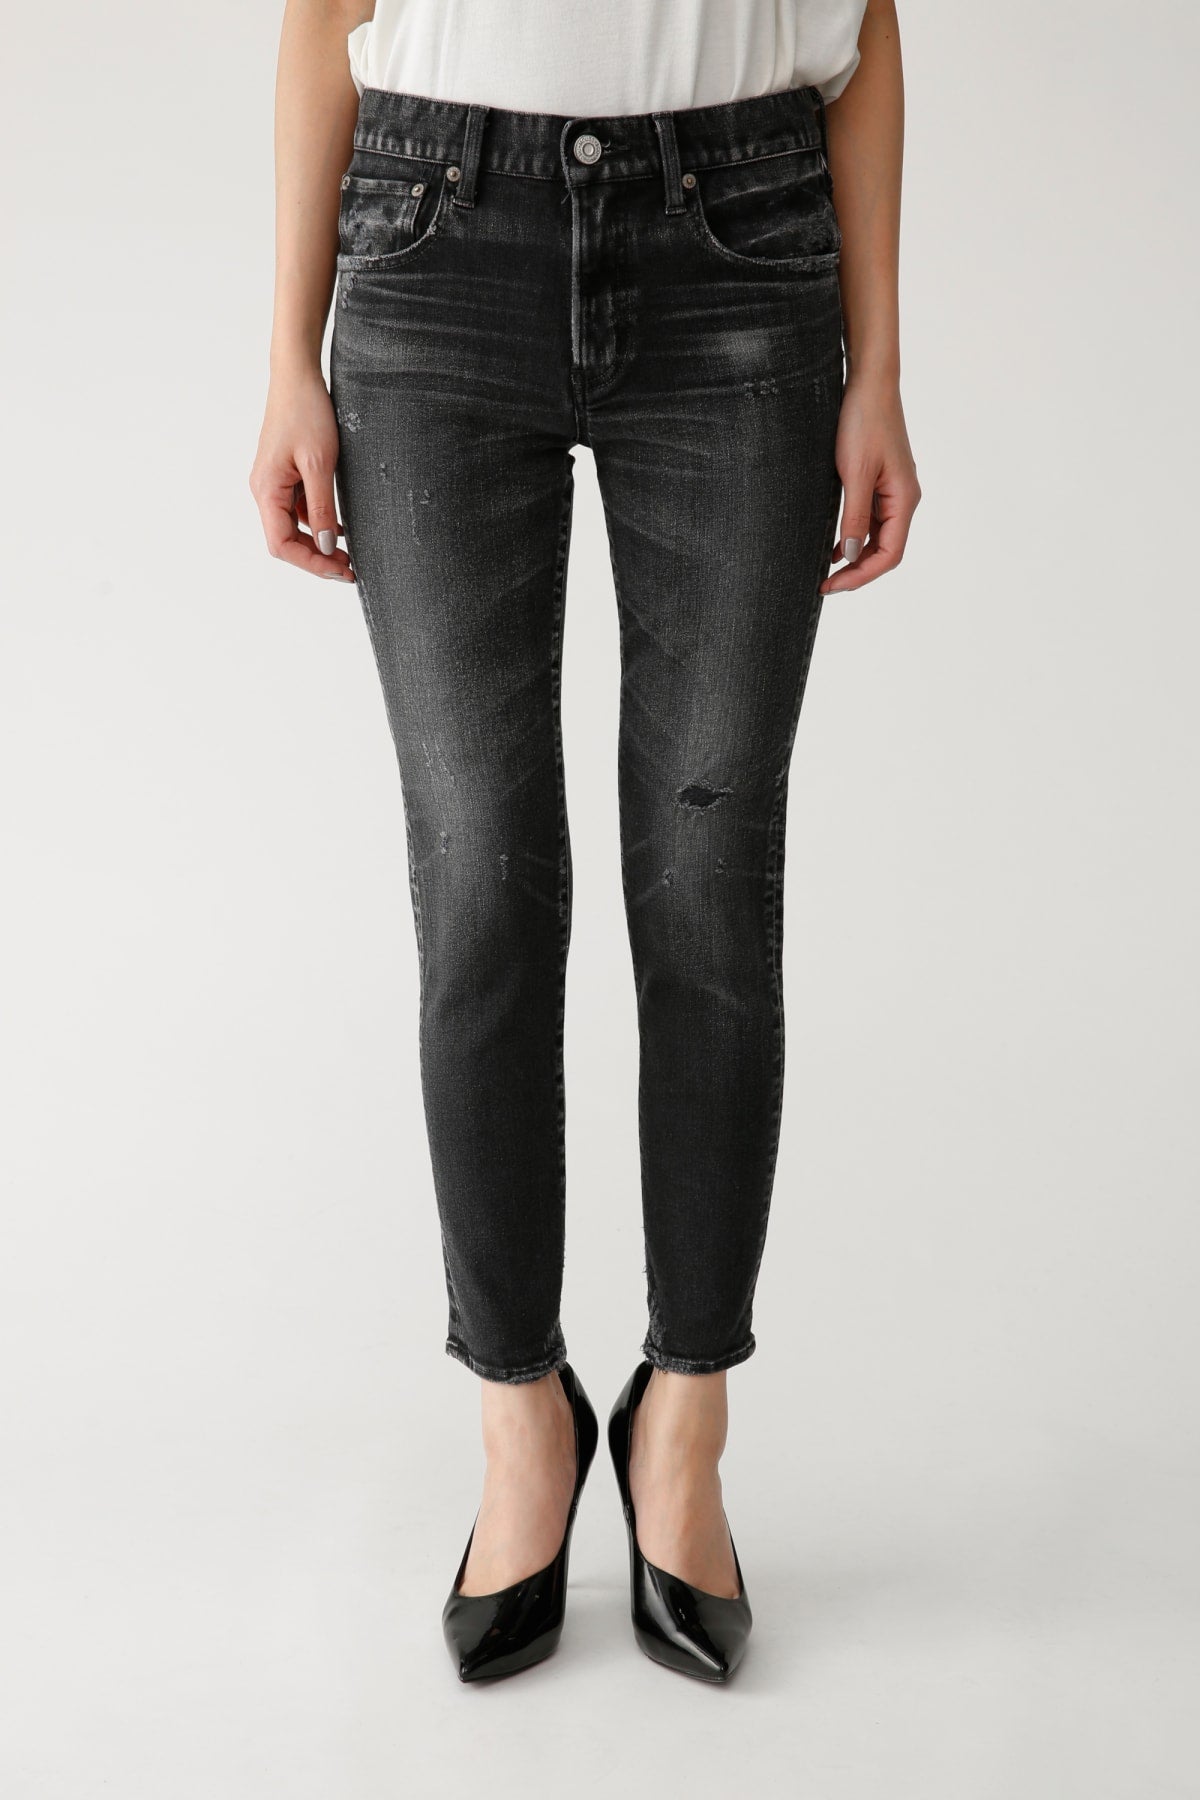 Moussy- COMFORT VELMA BLACK Skinny Jeans